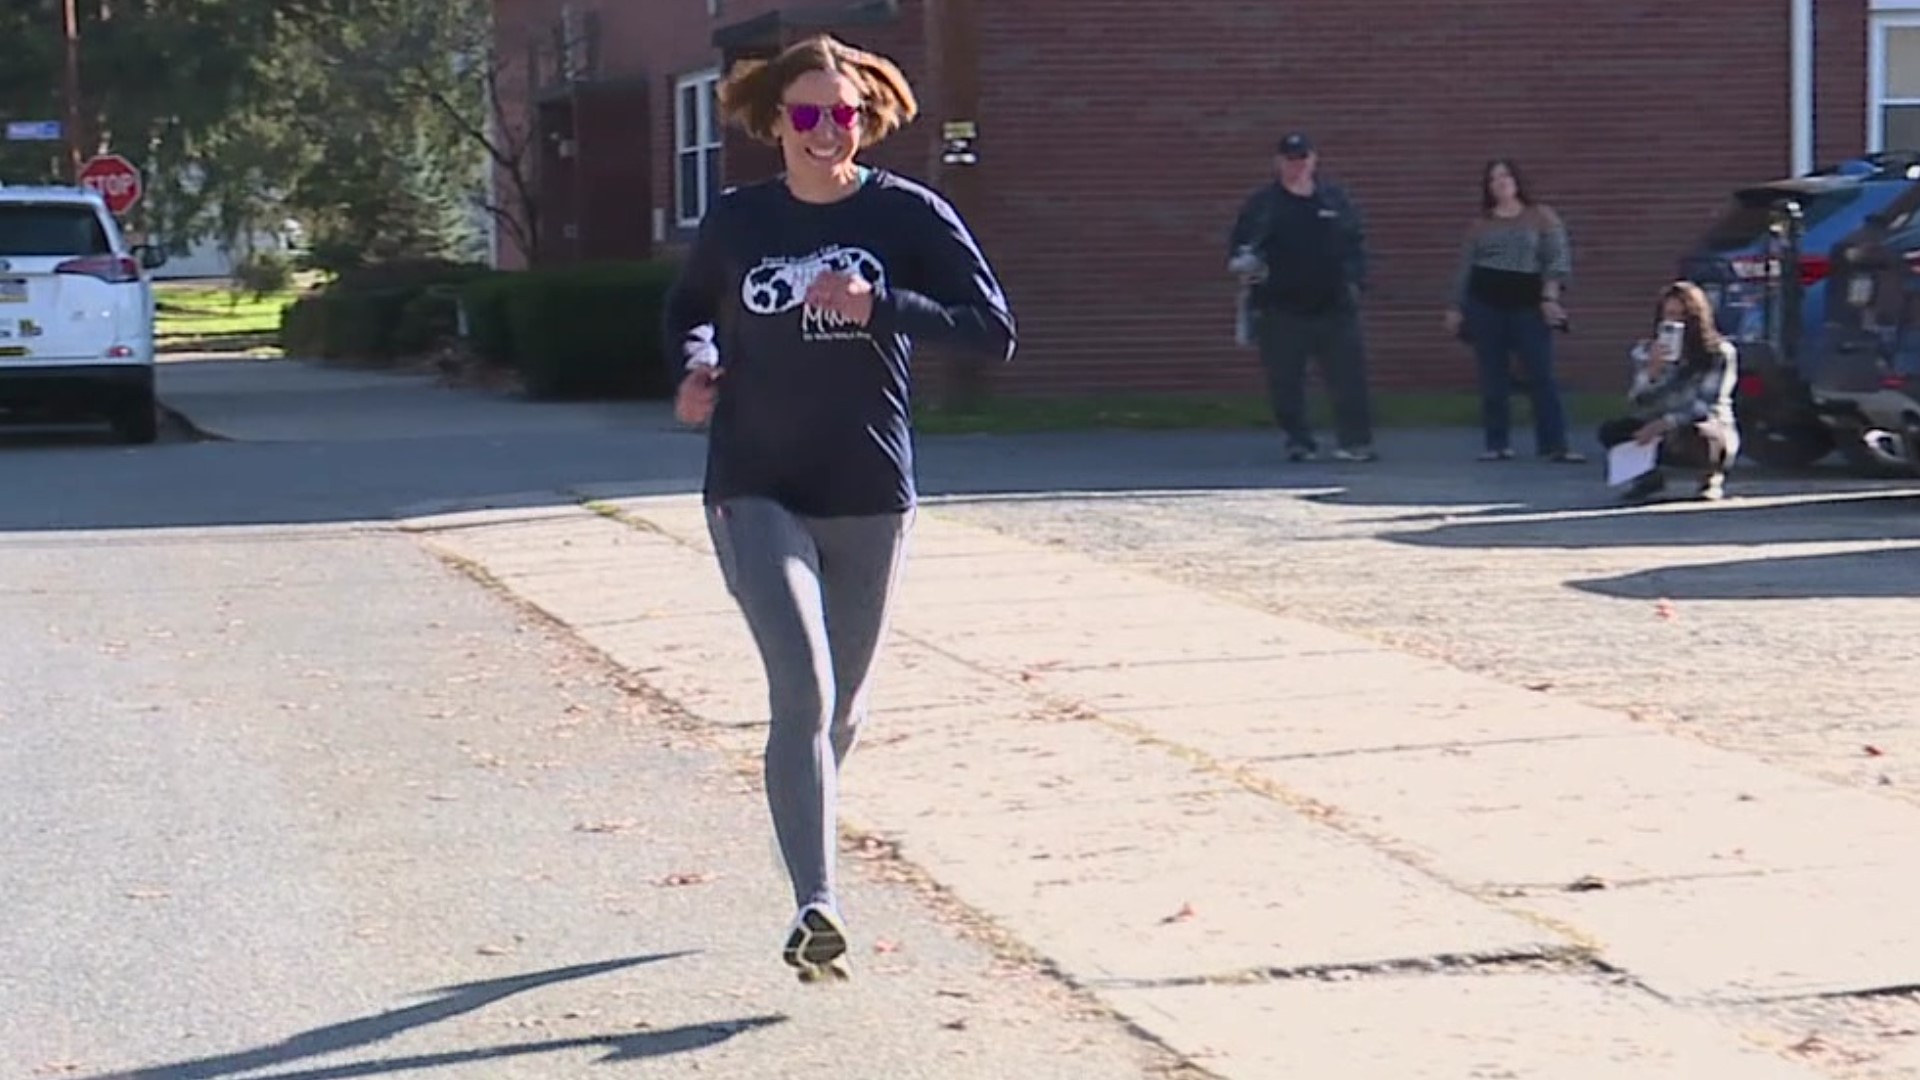 Jennifer Devore will be running 31 miles to raise money for kids entering foster care.